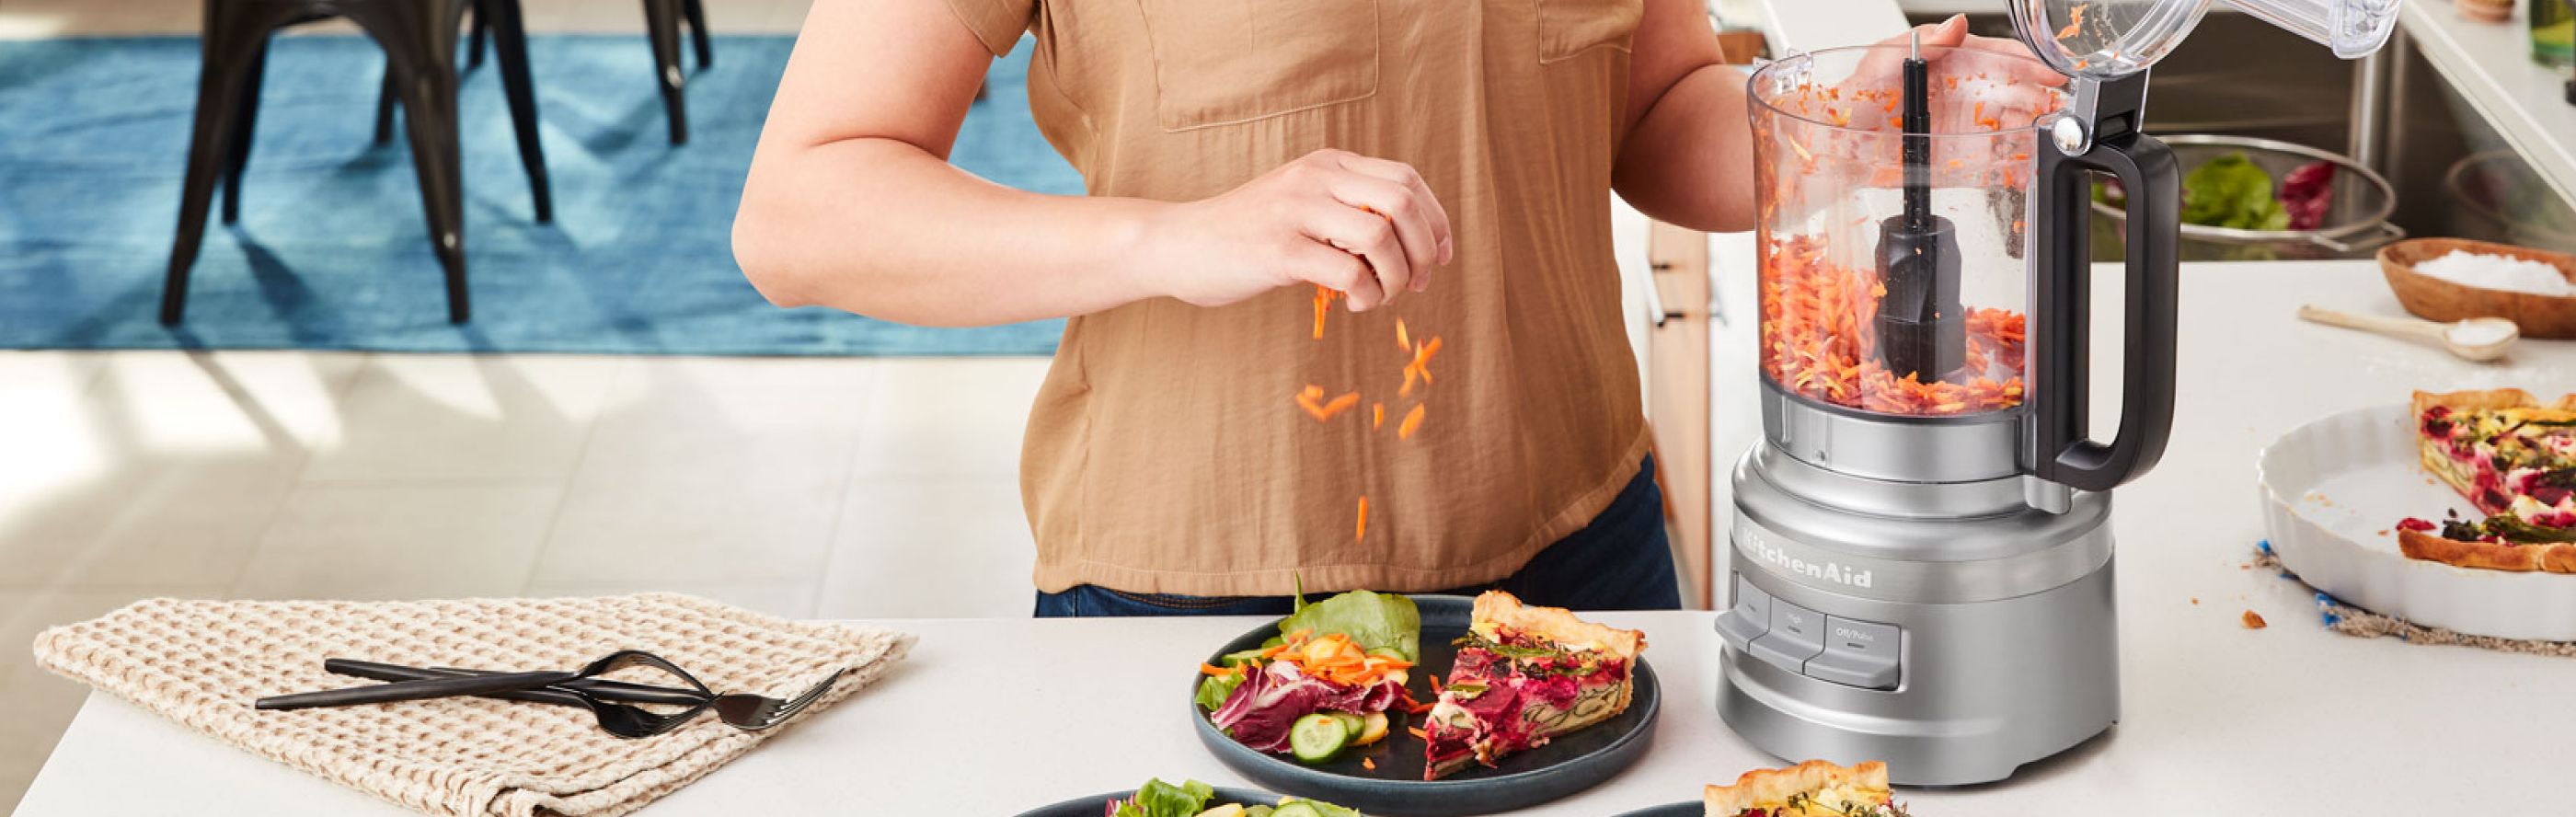 Woman shredding carrots in a KitchenAid® food processor